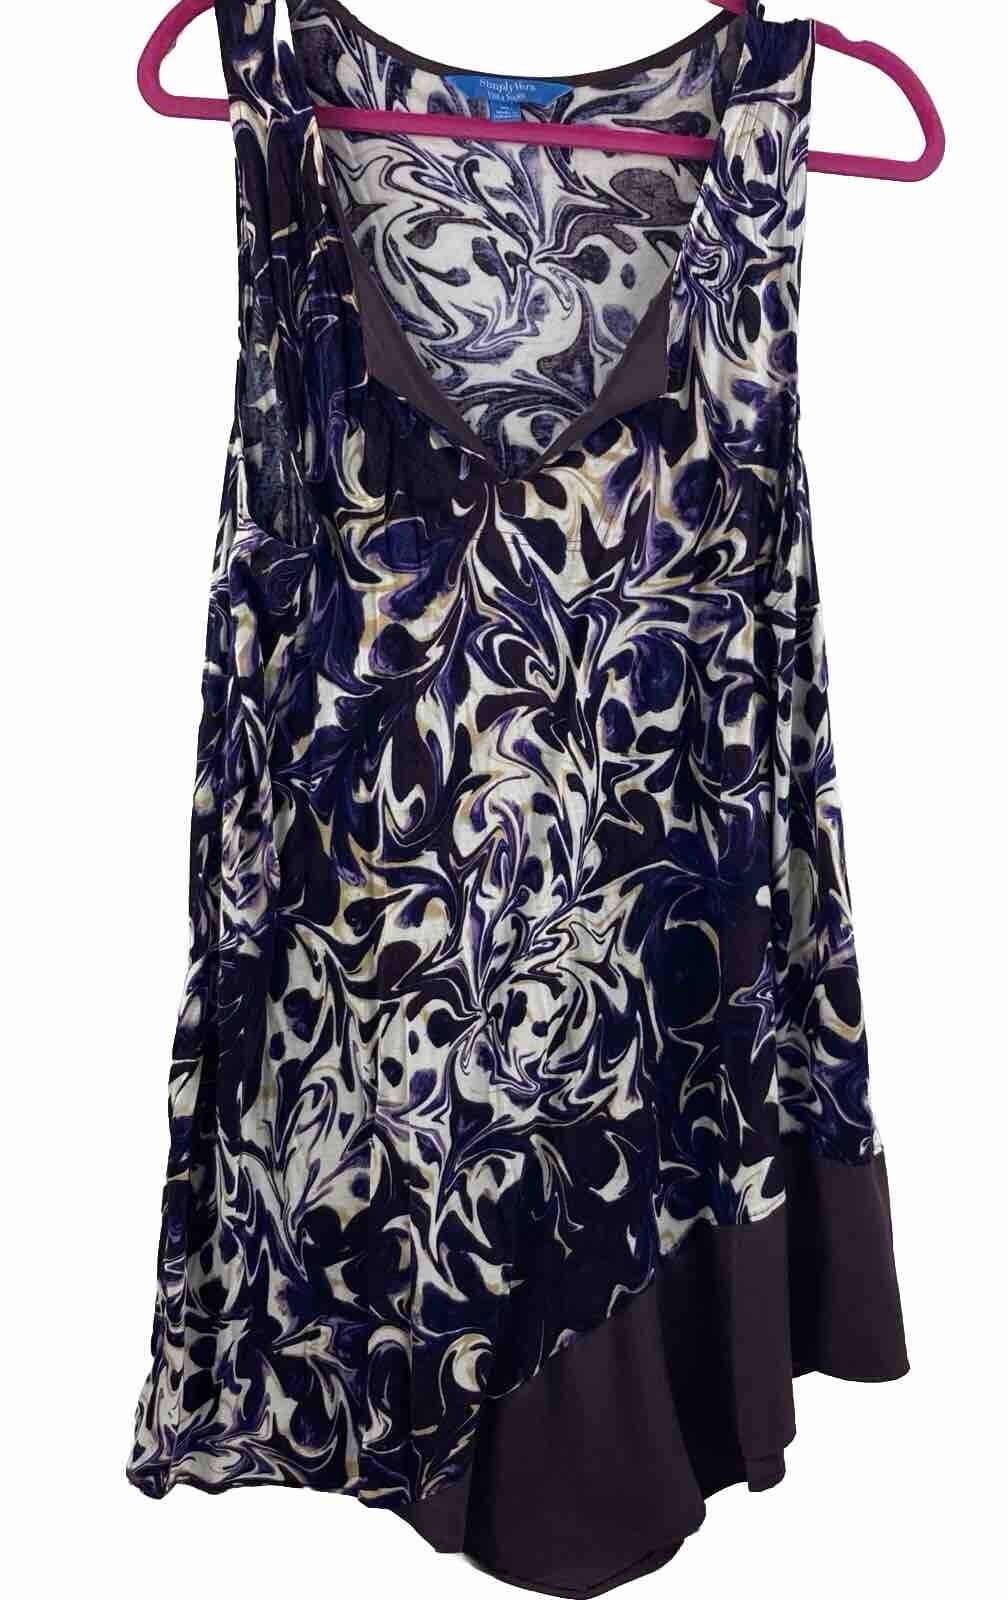 Simply Vera Wang Womens Purple Floral Print V-Neck Sleeveless Blouse Size XL